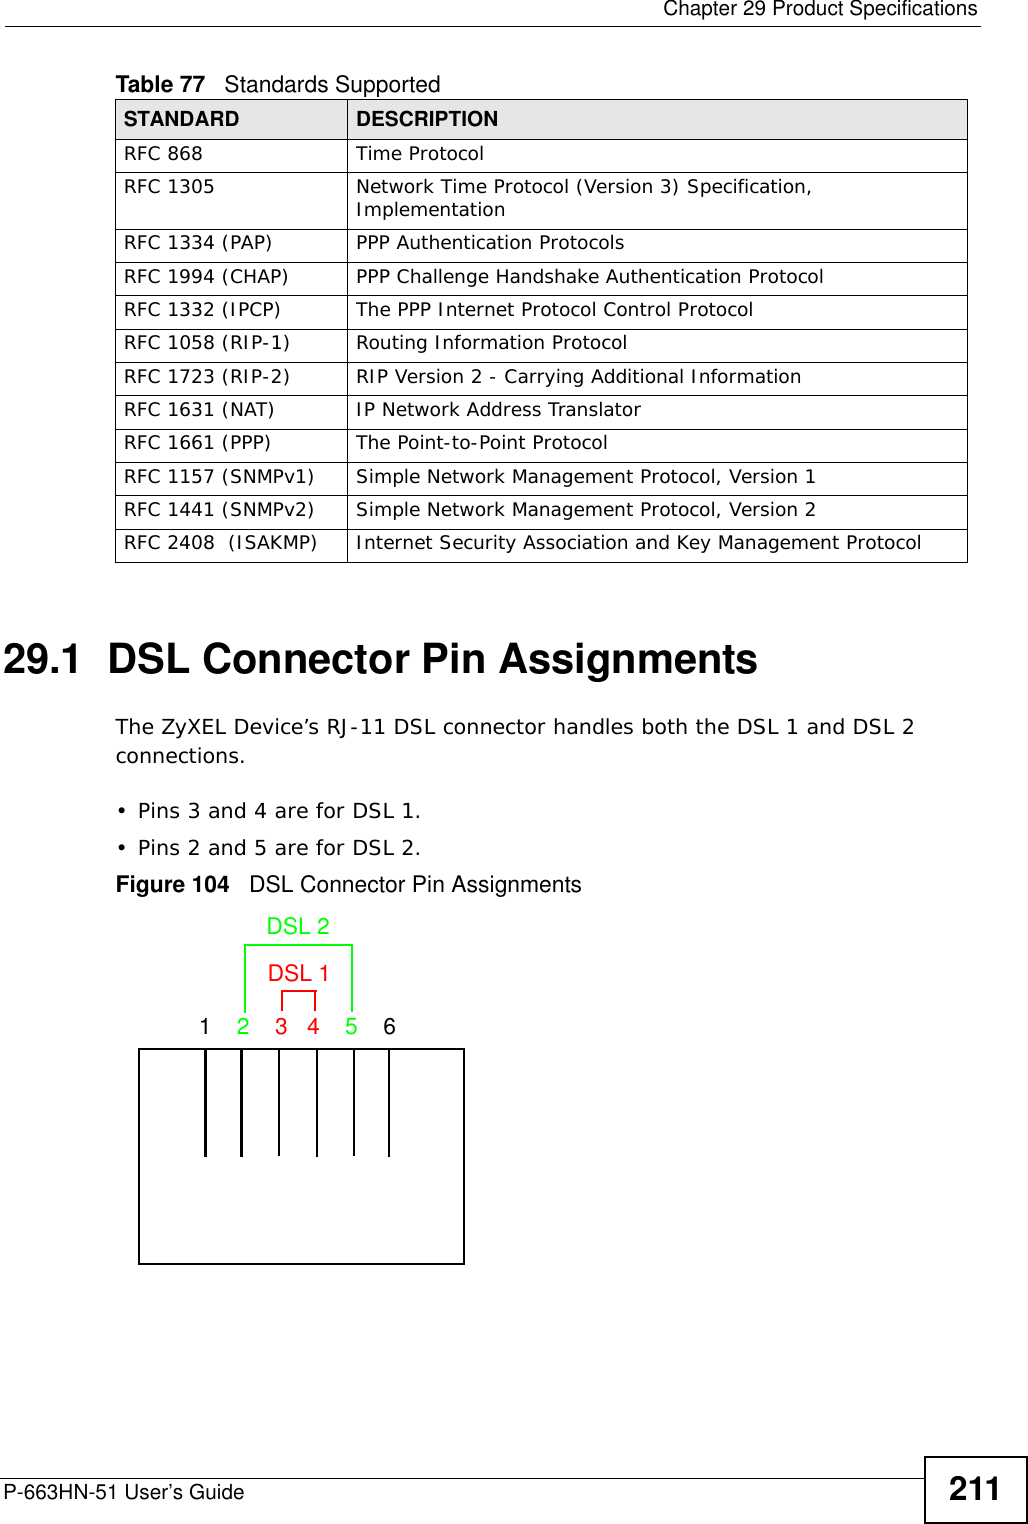  Chapter 29 Product SpecificationsP-663HN-51 User’s Guide 21129.1  DSL Connector Pin AssignmentsThe ZyXEL Device’s RJ-11 DSL connector handles both the DSL 1 and DSL 2 connections. • Pins 3 and 4 are for DSL 1.• Pins 2 and 5 are for DSL 2. Figure 104   DSL Connector Pin AssignmentsRFC 868 Time ProtocolRFC 1305 Network Time Protocol (Version 3) Specification, ImplementationRFC 1334 (PAP) PPP Authentication ProtocolsRFC 1994 (CHAP) PPP Challenge Handshake Authentication ProtocolRFC 1332 (IPCP) The PPP Internet Protocol Control ProtocolRFC 1058 (RIP-1) Routing Information ProtocolRFC 1723 (RIP-2) RIP Version 2 - Carrying Additional InformationRFC 1631 (NAT) IP Network Address TranslatorRFC 1661 (PPP) The Point-to-Point ProtocolRFC 1157 (SNMPv1) Simple Network Management Protocol, Version 1RFC 1441 (SNMPv2) Simple Network Management Protocol, Version 2RFC 2408  (ISAKMP) Internet Security Association and Key Management ProtocolTable 77   Standards SupportedSTANDARD DESCRIPTION1    2    3   4    5    6DSL 1DSL 2